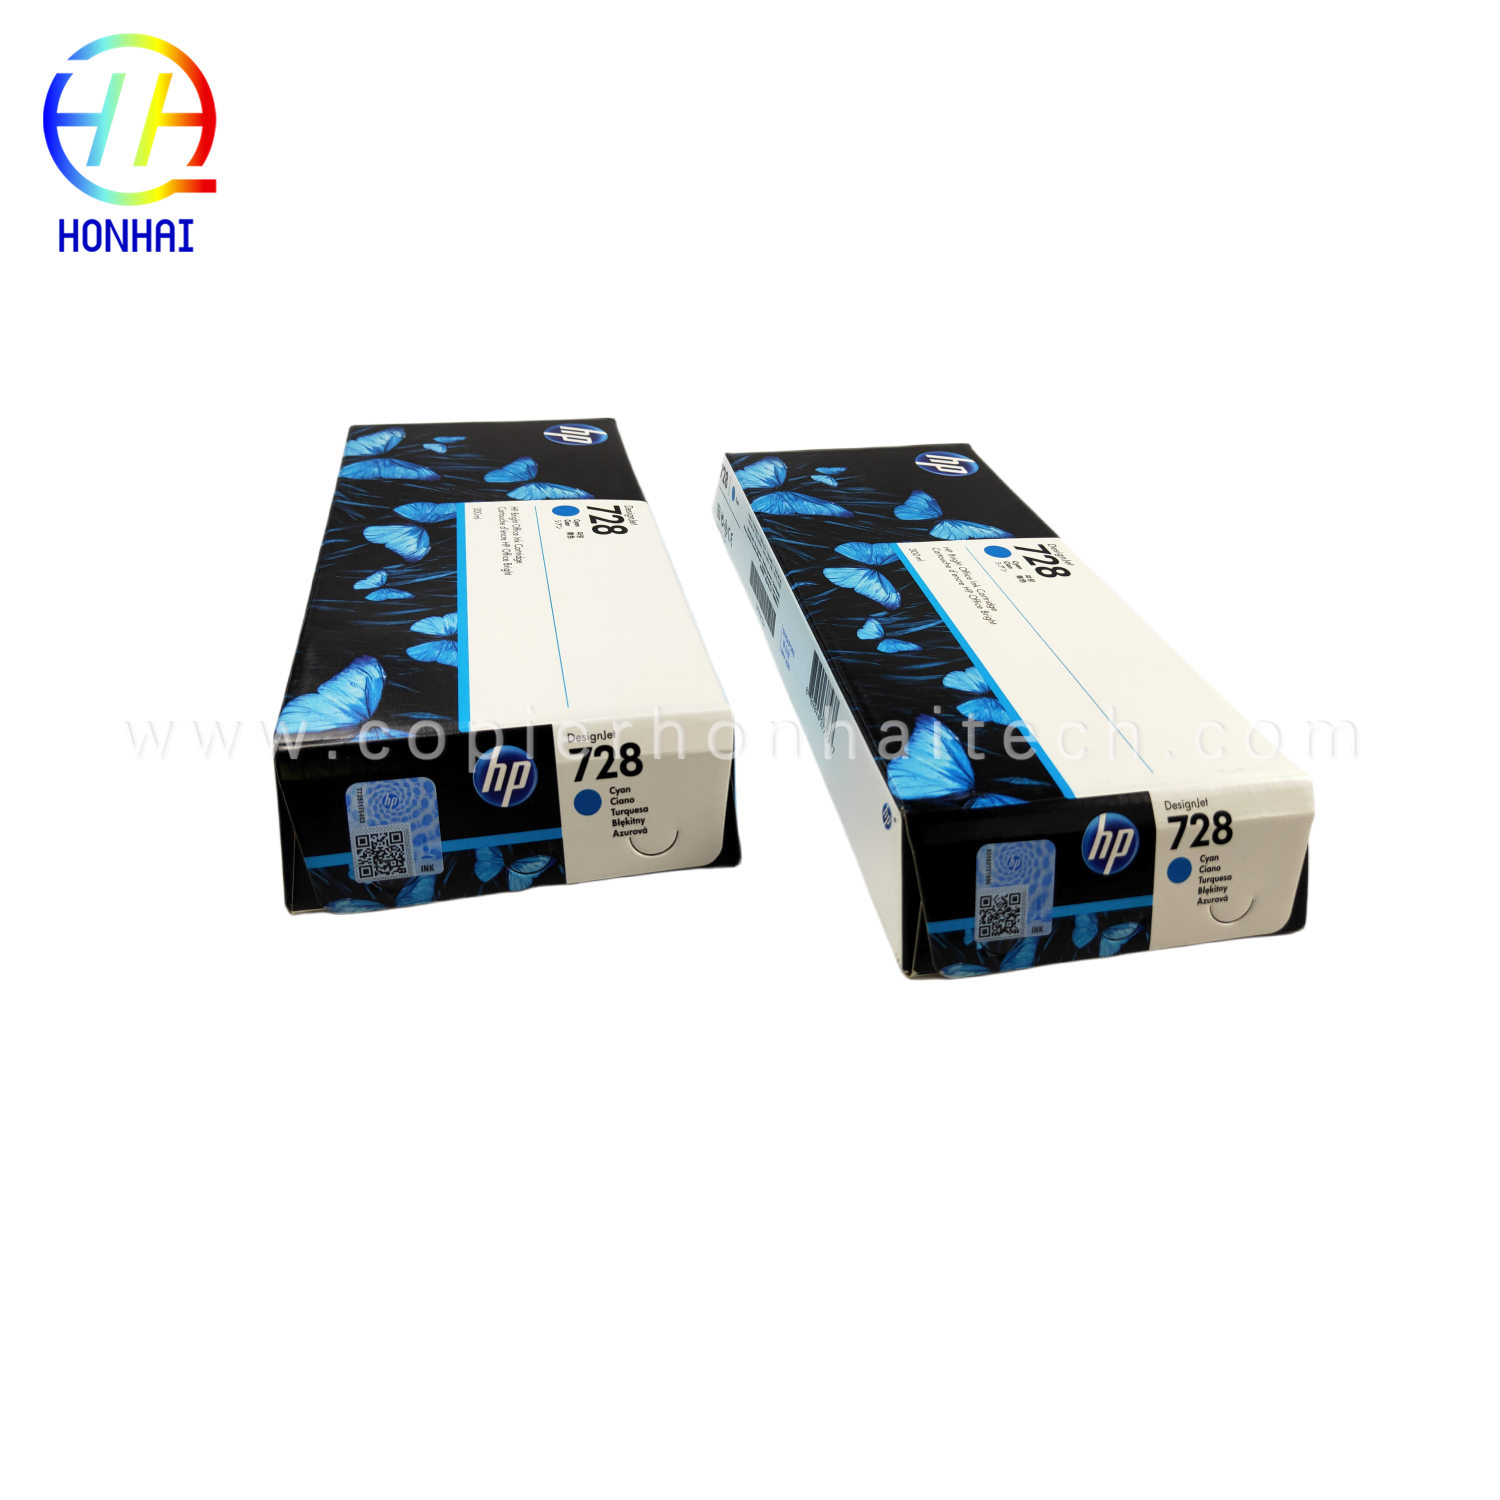 https://www.copierhonhaitech.com/original-new-ink-cartridge-cyan-for-hp-designjet-t730-and-t830-large-format-plotter-printers-and-hp-729-designjet-printhead- 728-f9k17a-produk/